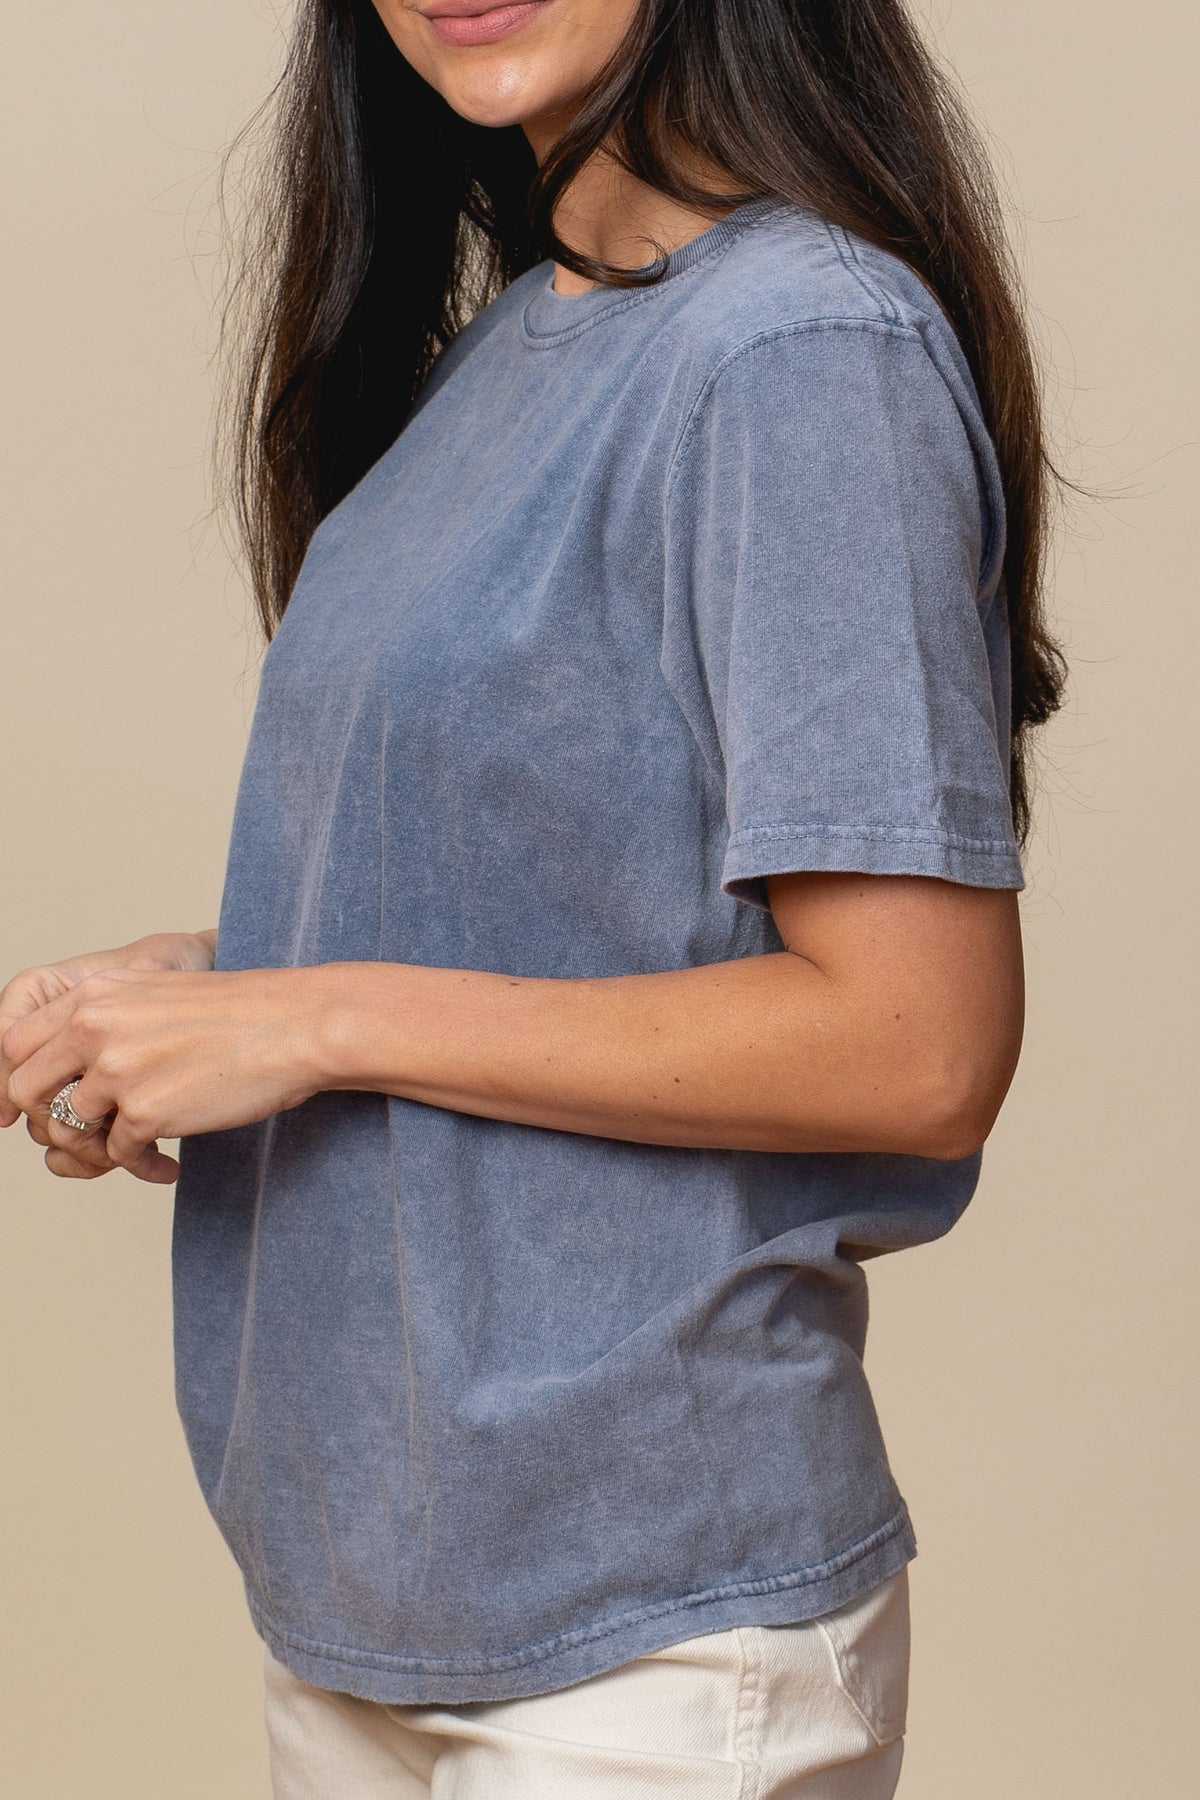 American-Made Soft Cotton Summer T-Shirt: Goodwear Shirts Made In 